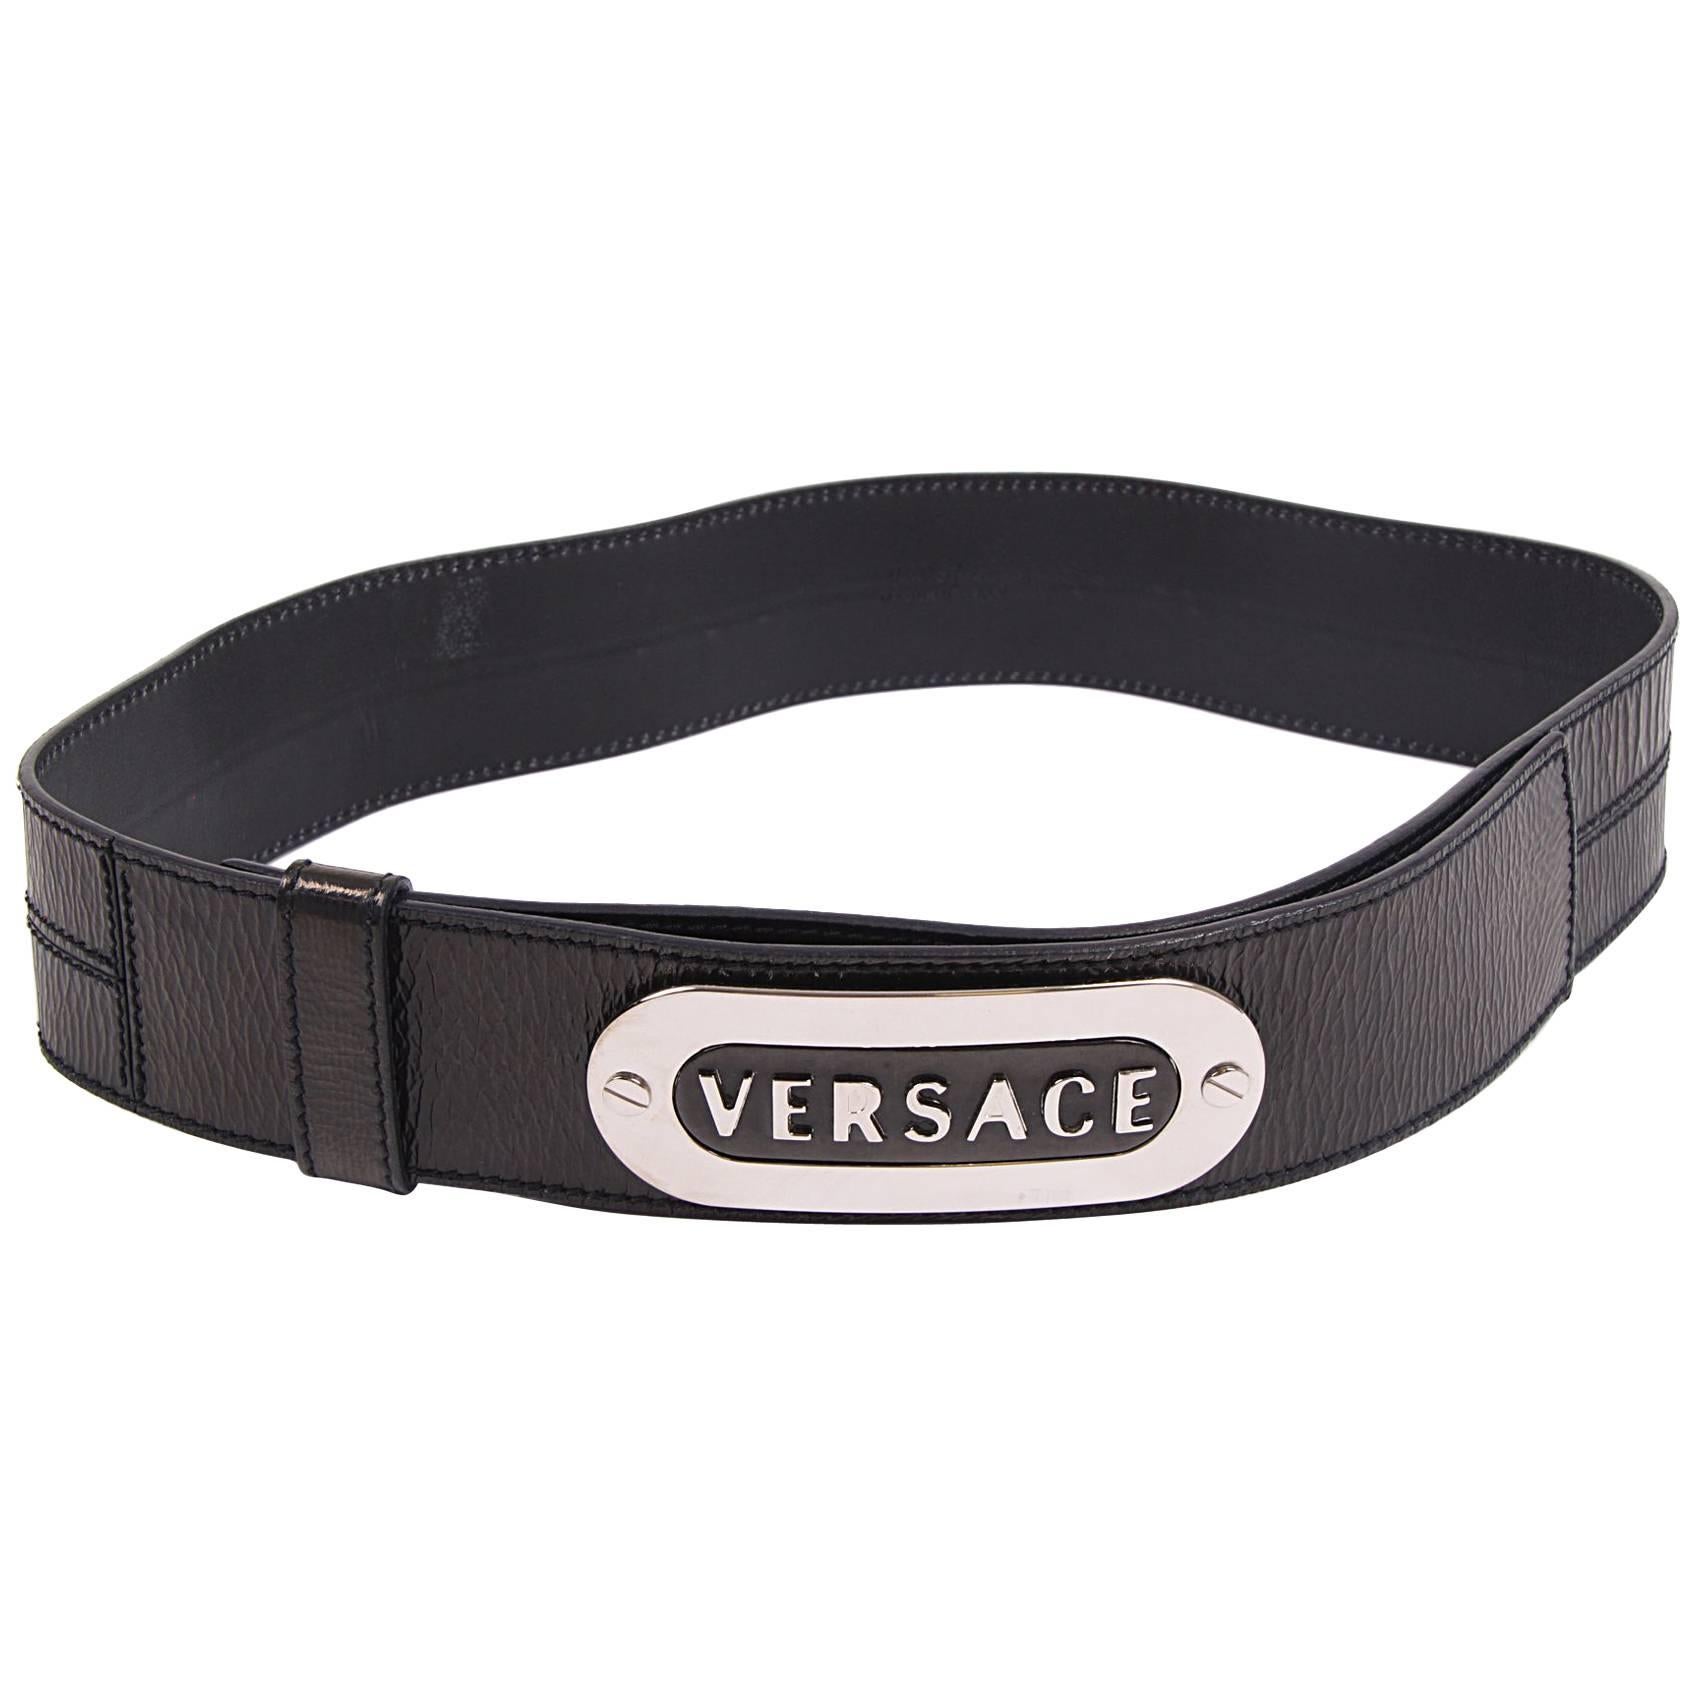 Versace Crinkled Patent Leather Belt - black